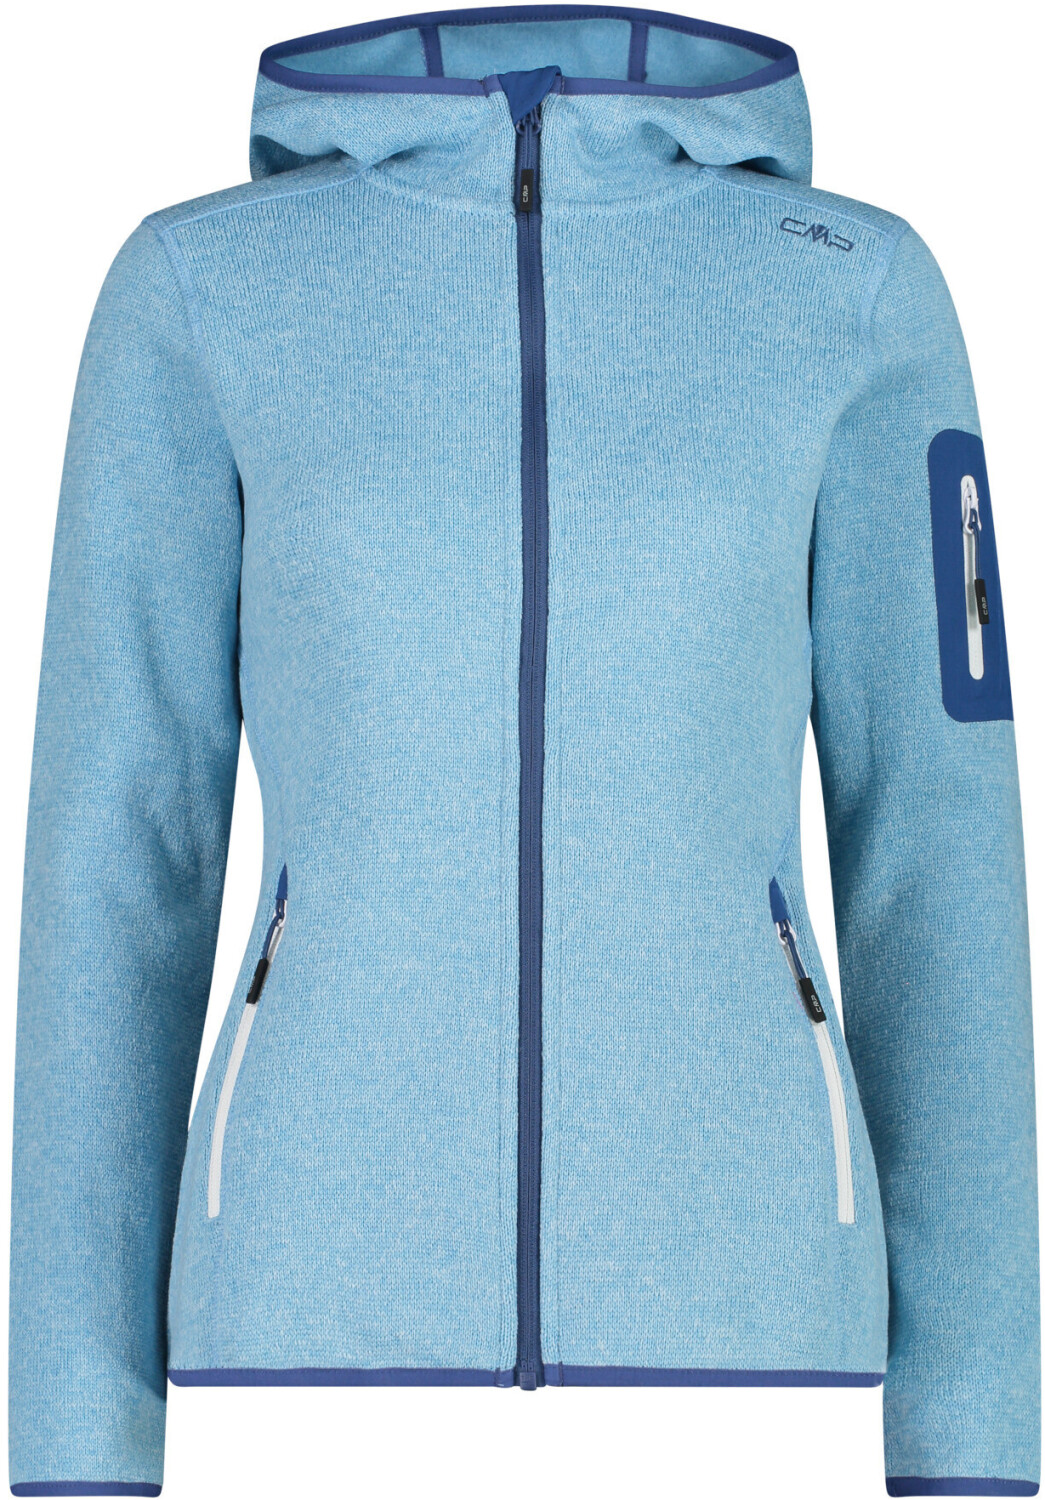 | € Fix Woman (3H19826) Jacket bei CMP Preisvergleich ab Fleece blue cielo/dusty 32,46 Hood